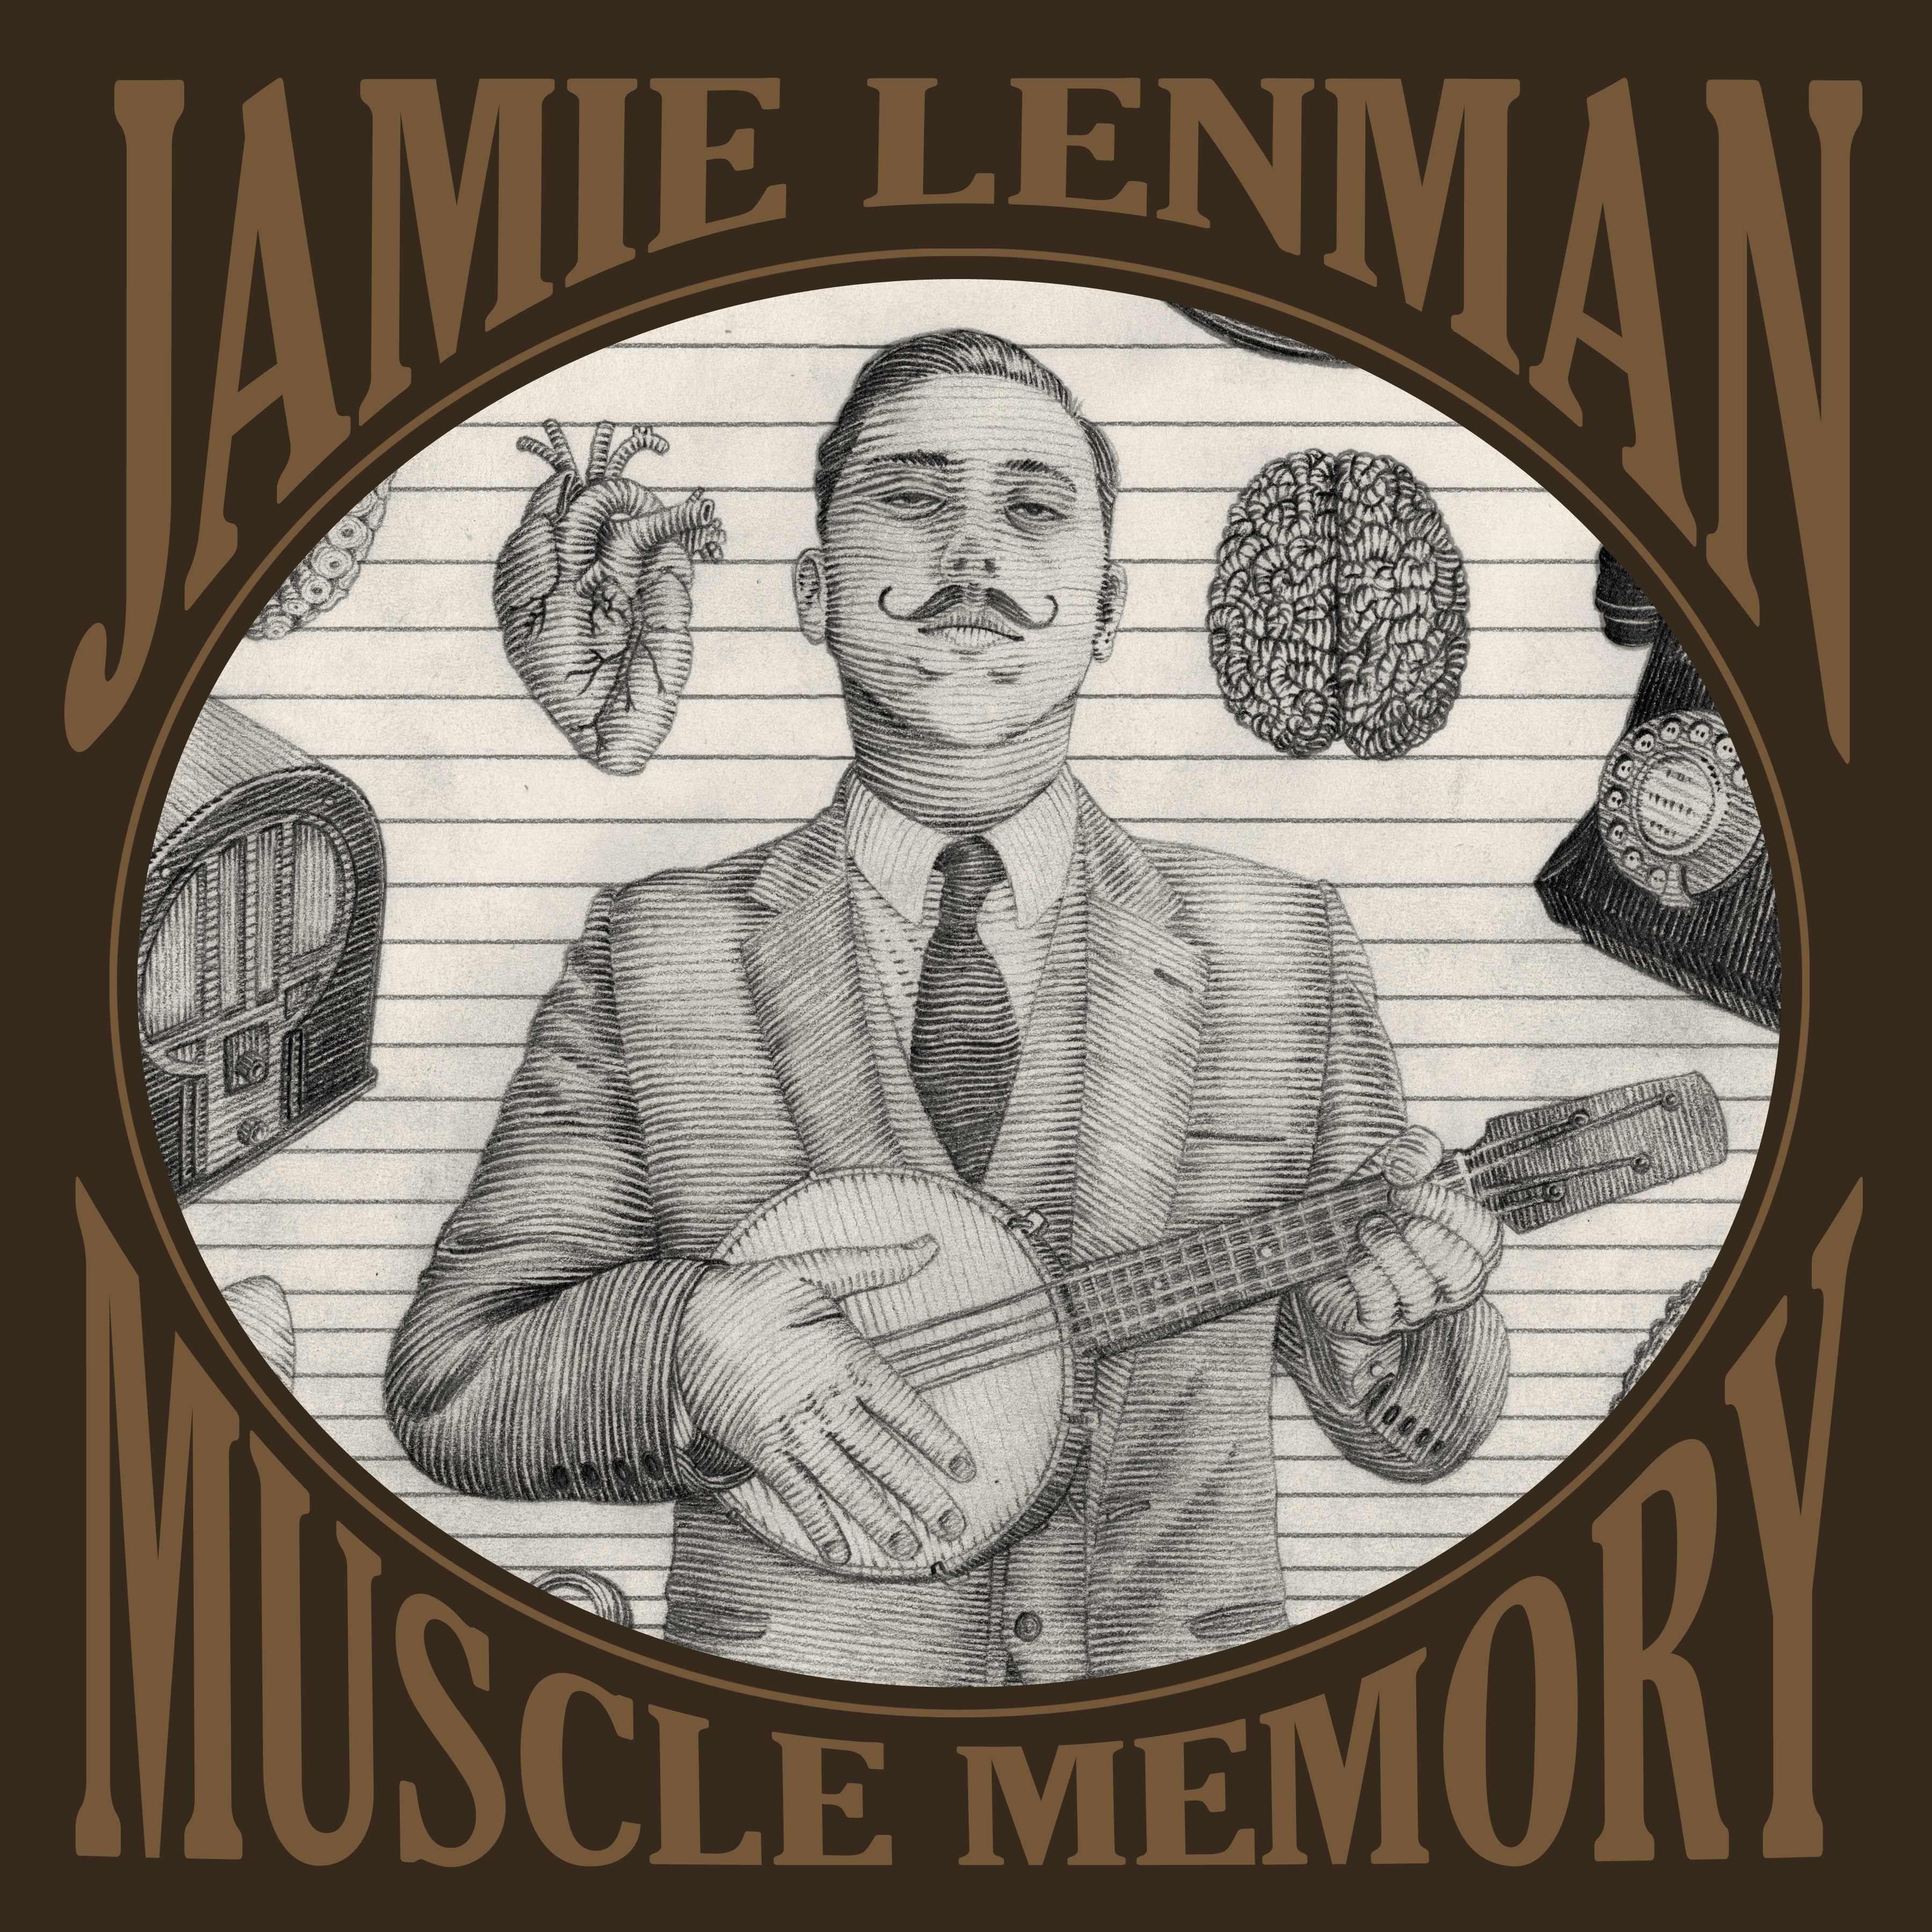 Jamie Lenman - Muscle Memory Art Print